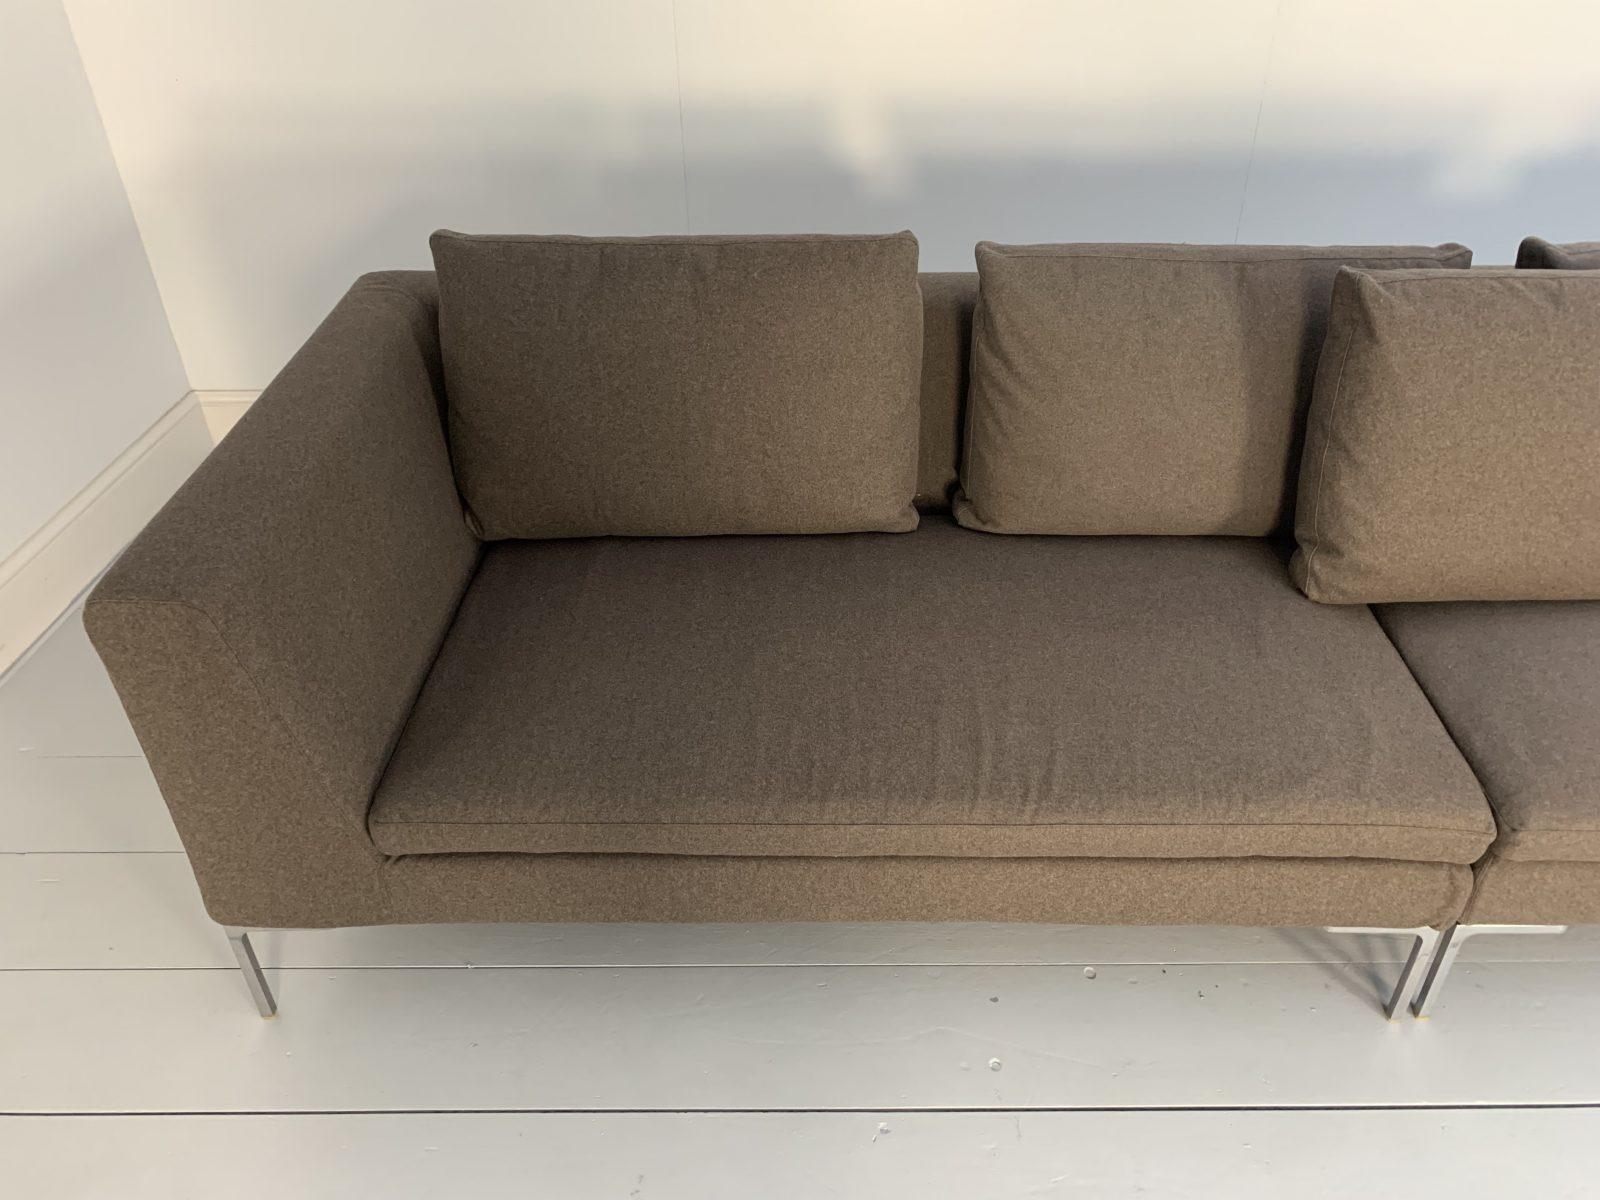 B&B Italia “Charles” L-Shape Sectional Sofa in Beige “Serra” Cashmere For Sale 3